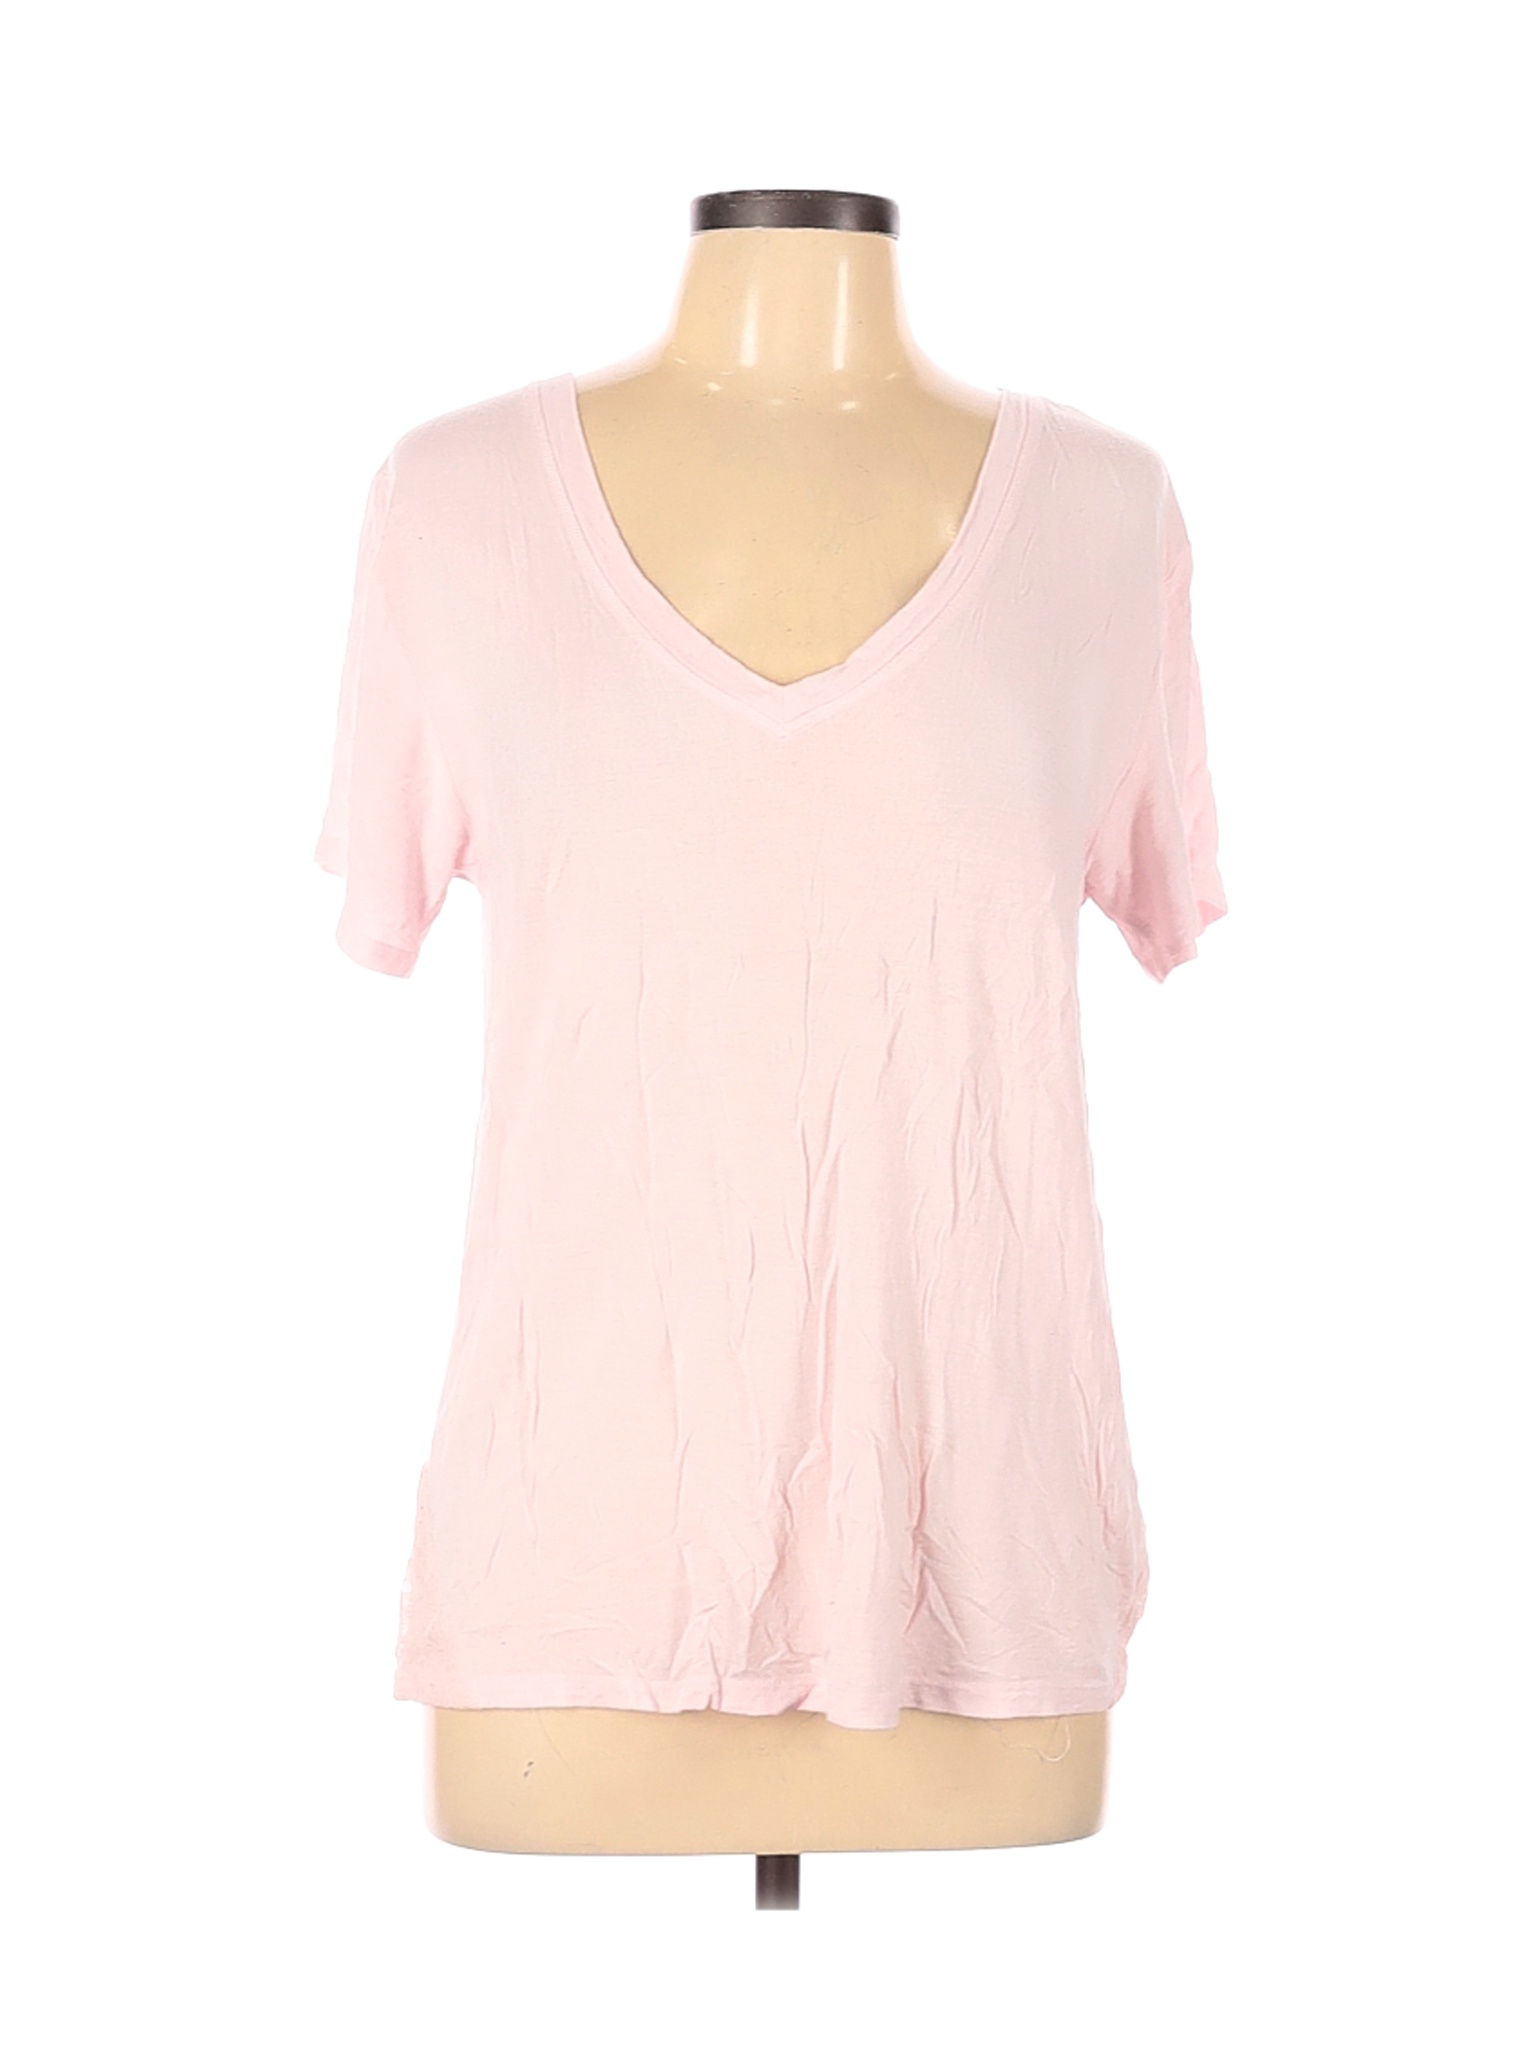 Honeydew Women Pink Short Sleeve Top L | eBay